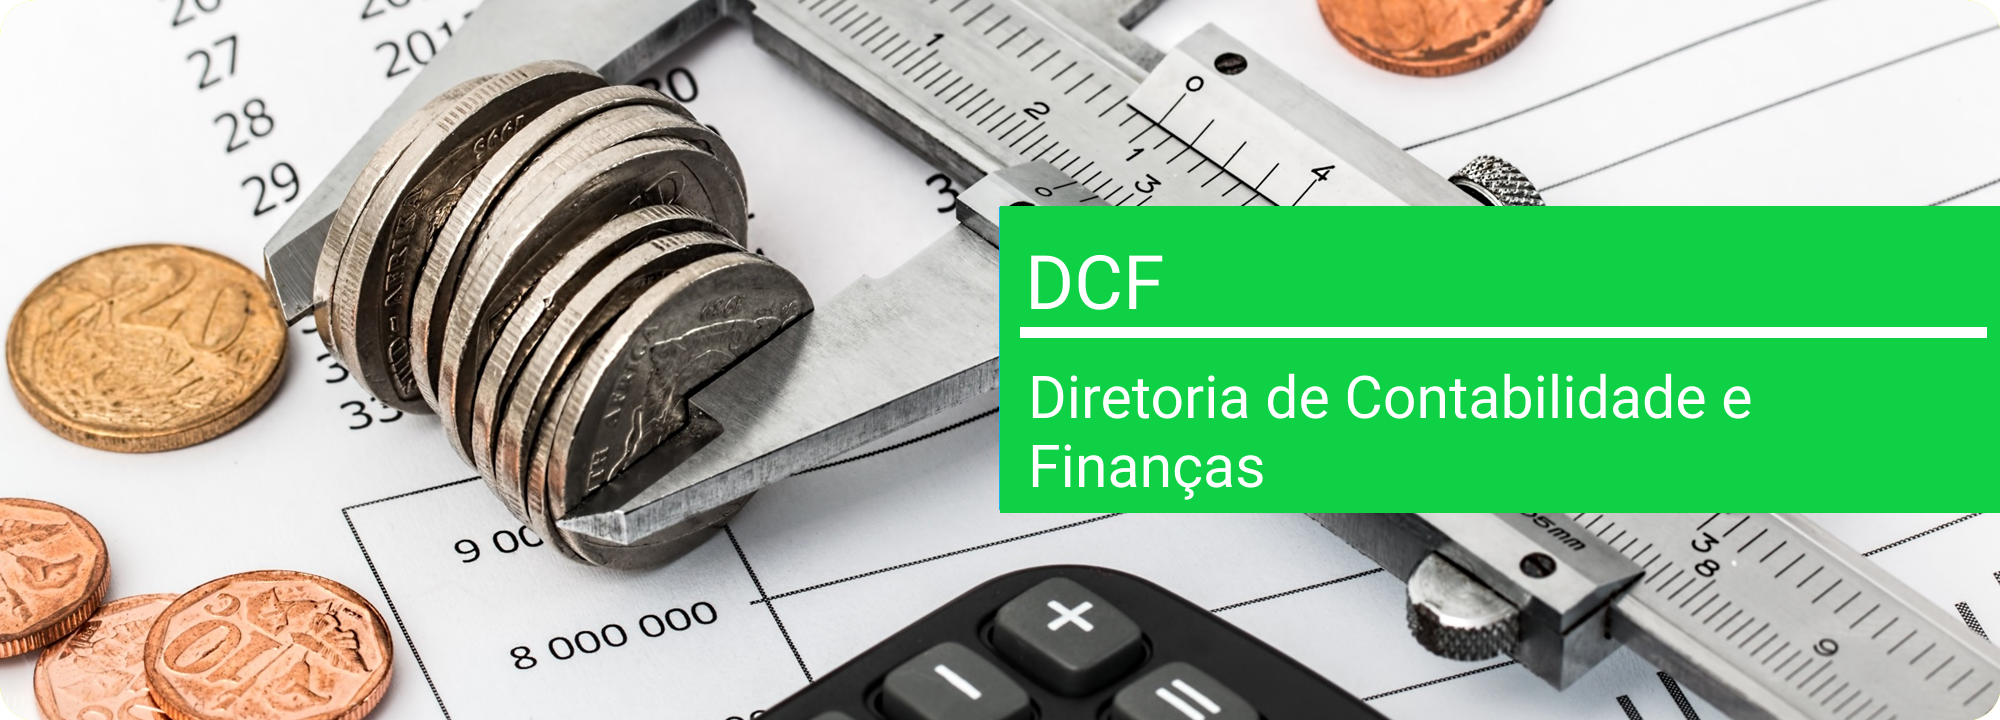 DCF capa